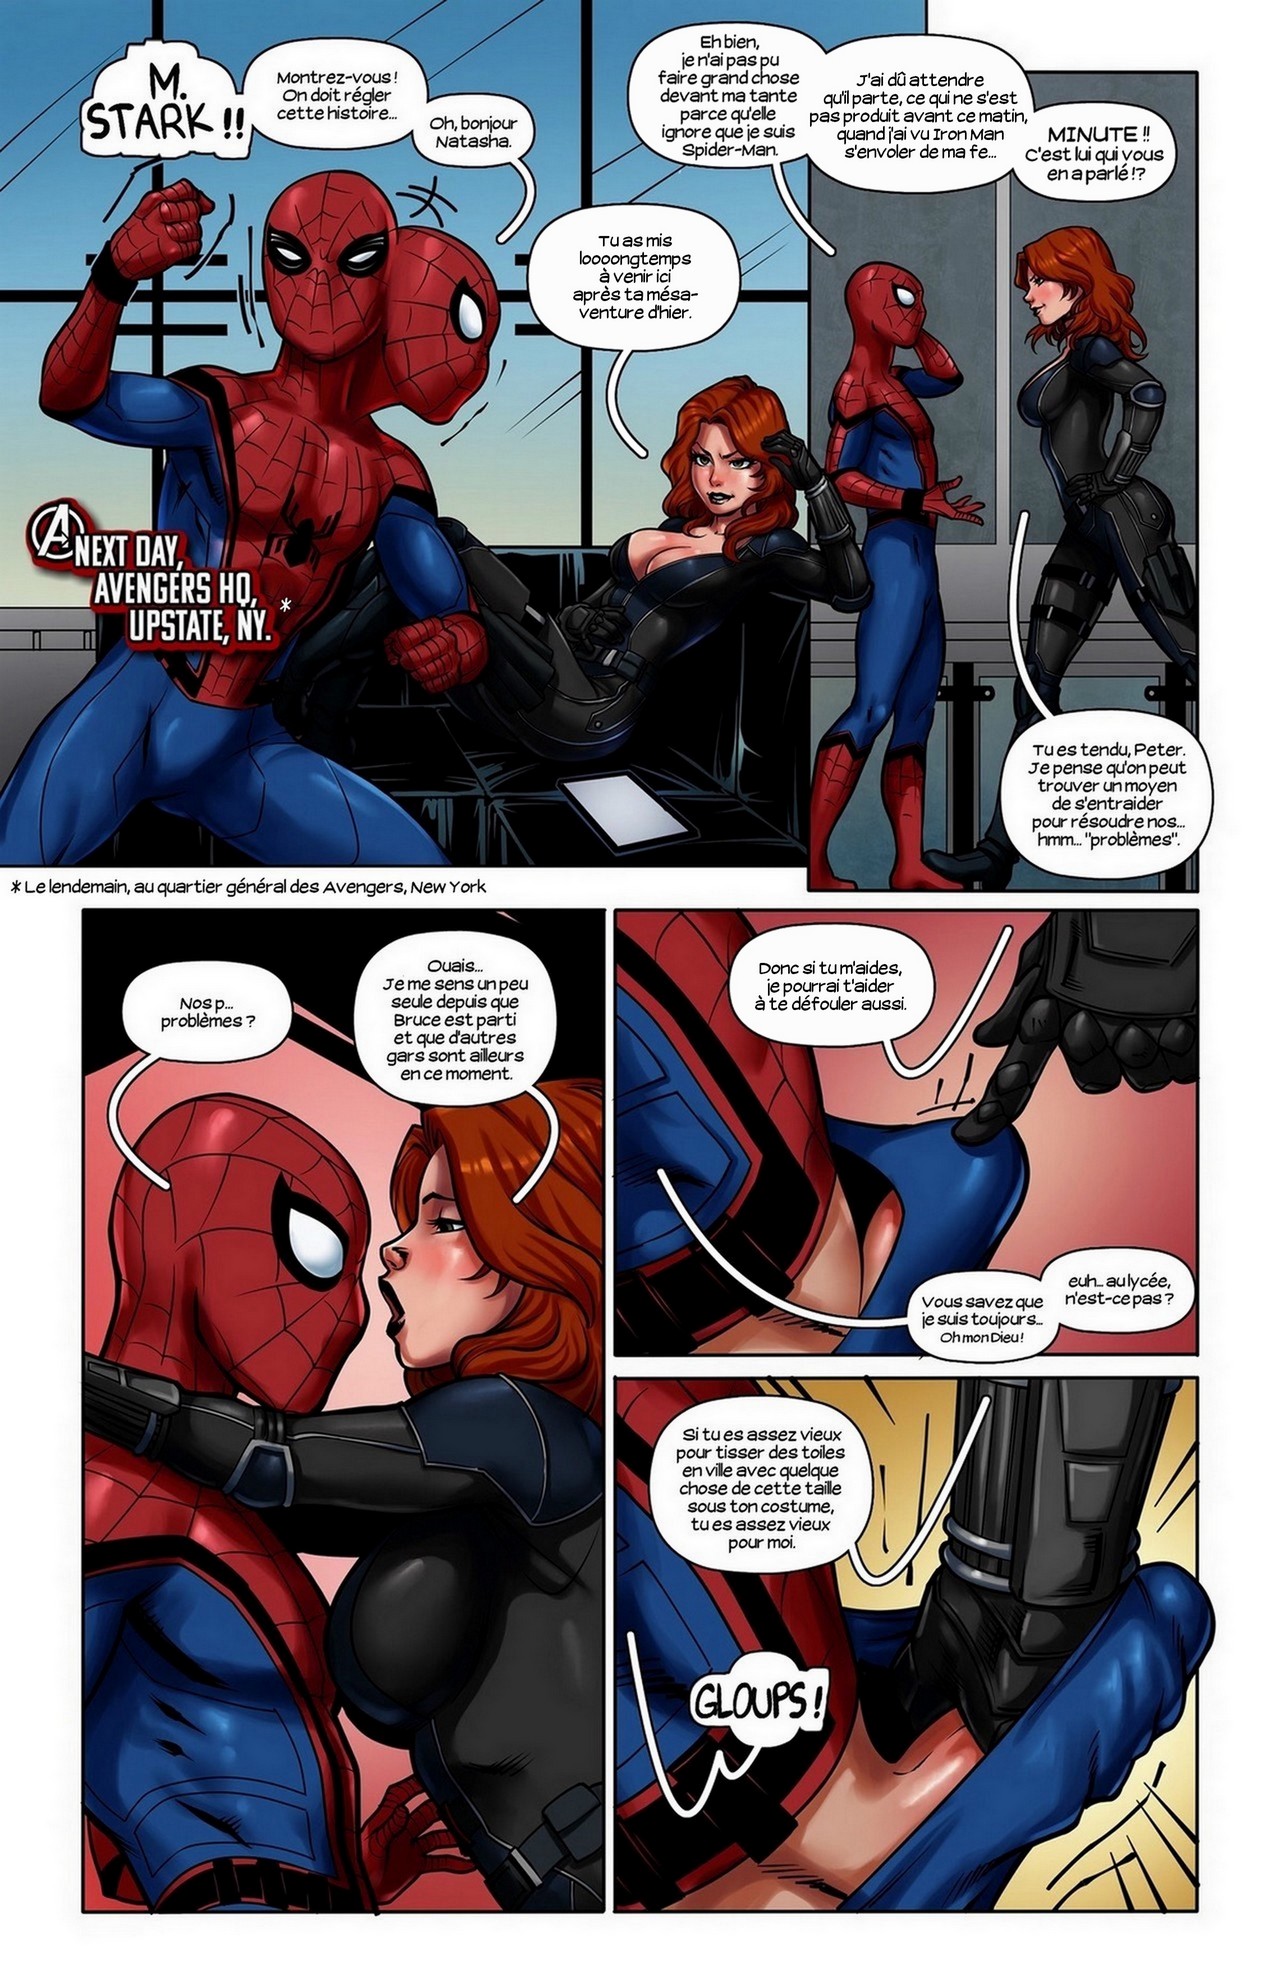 Spider-Man - Civil war numero d'image 3